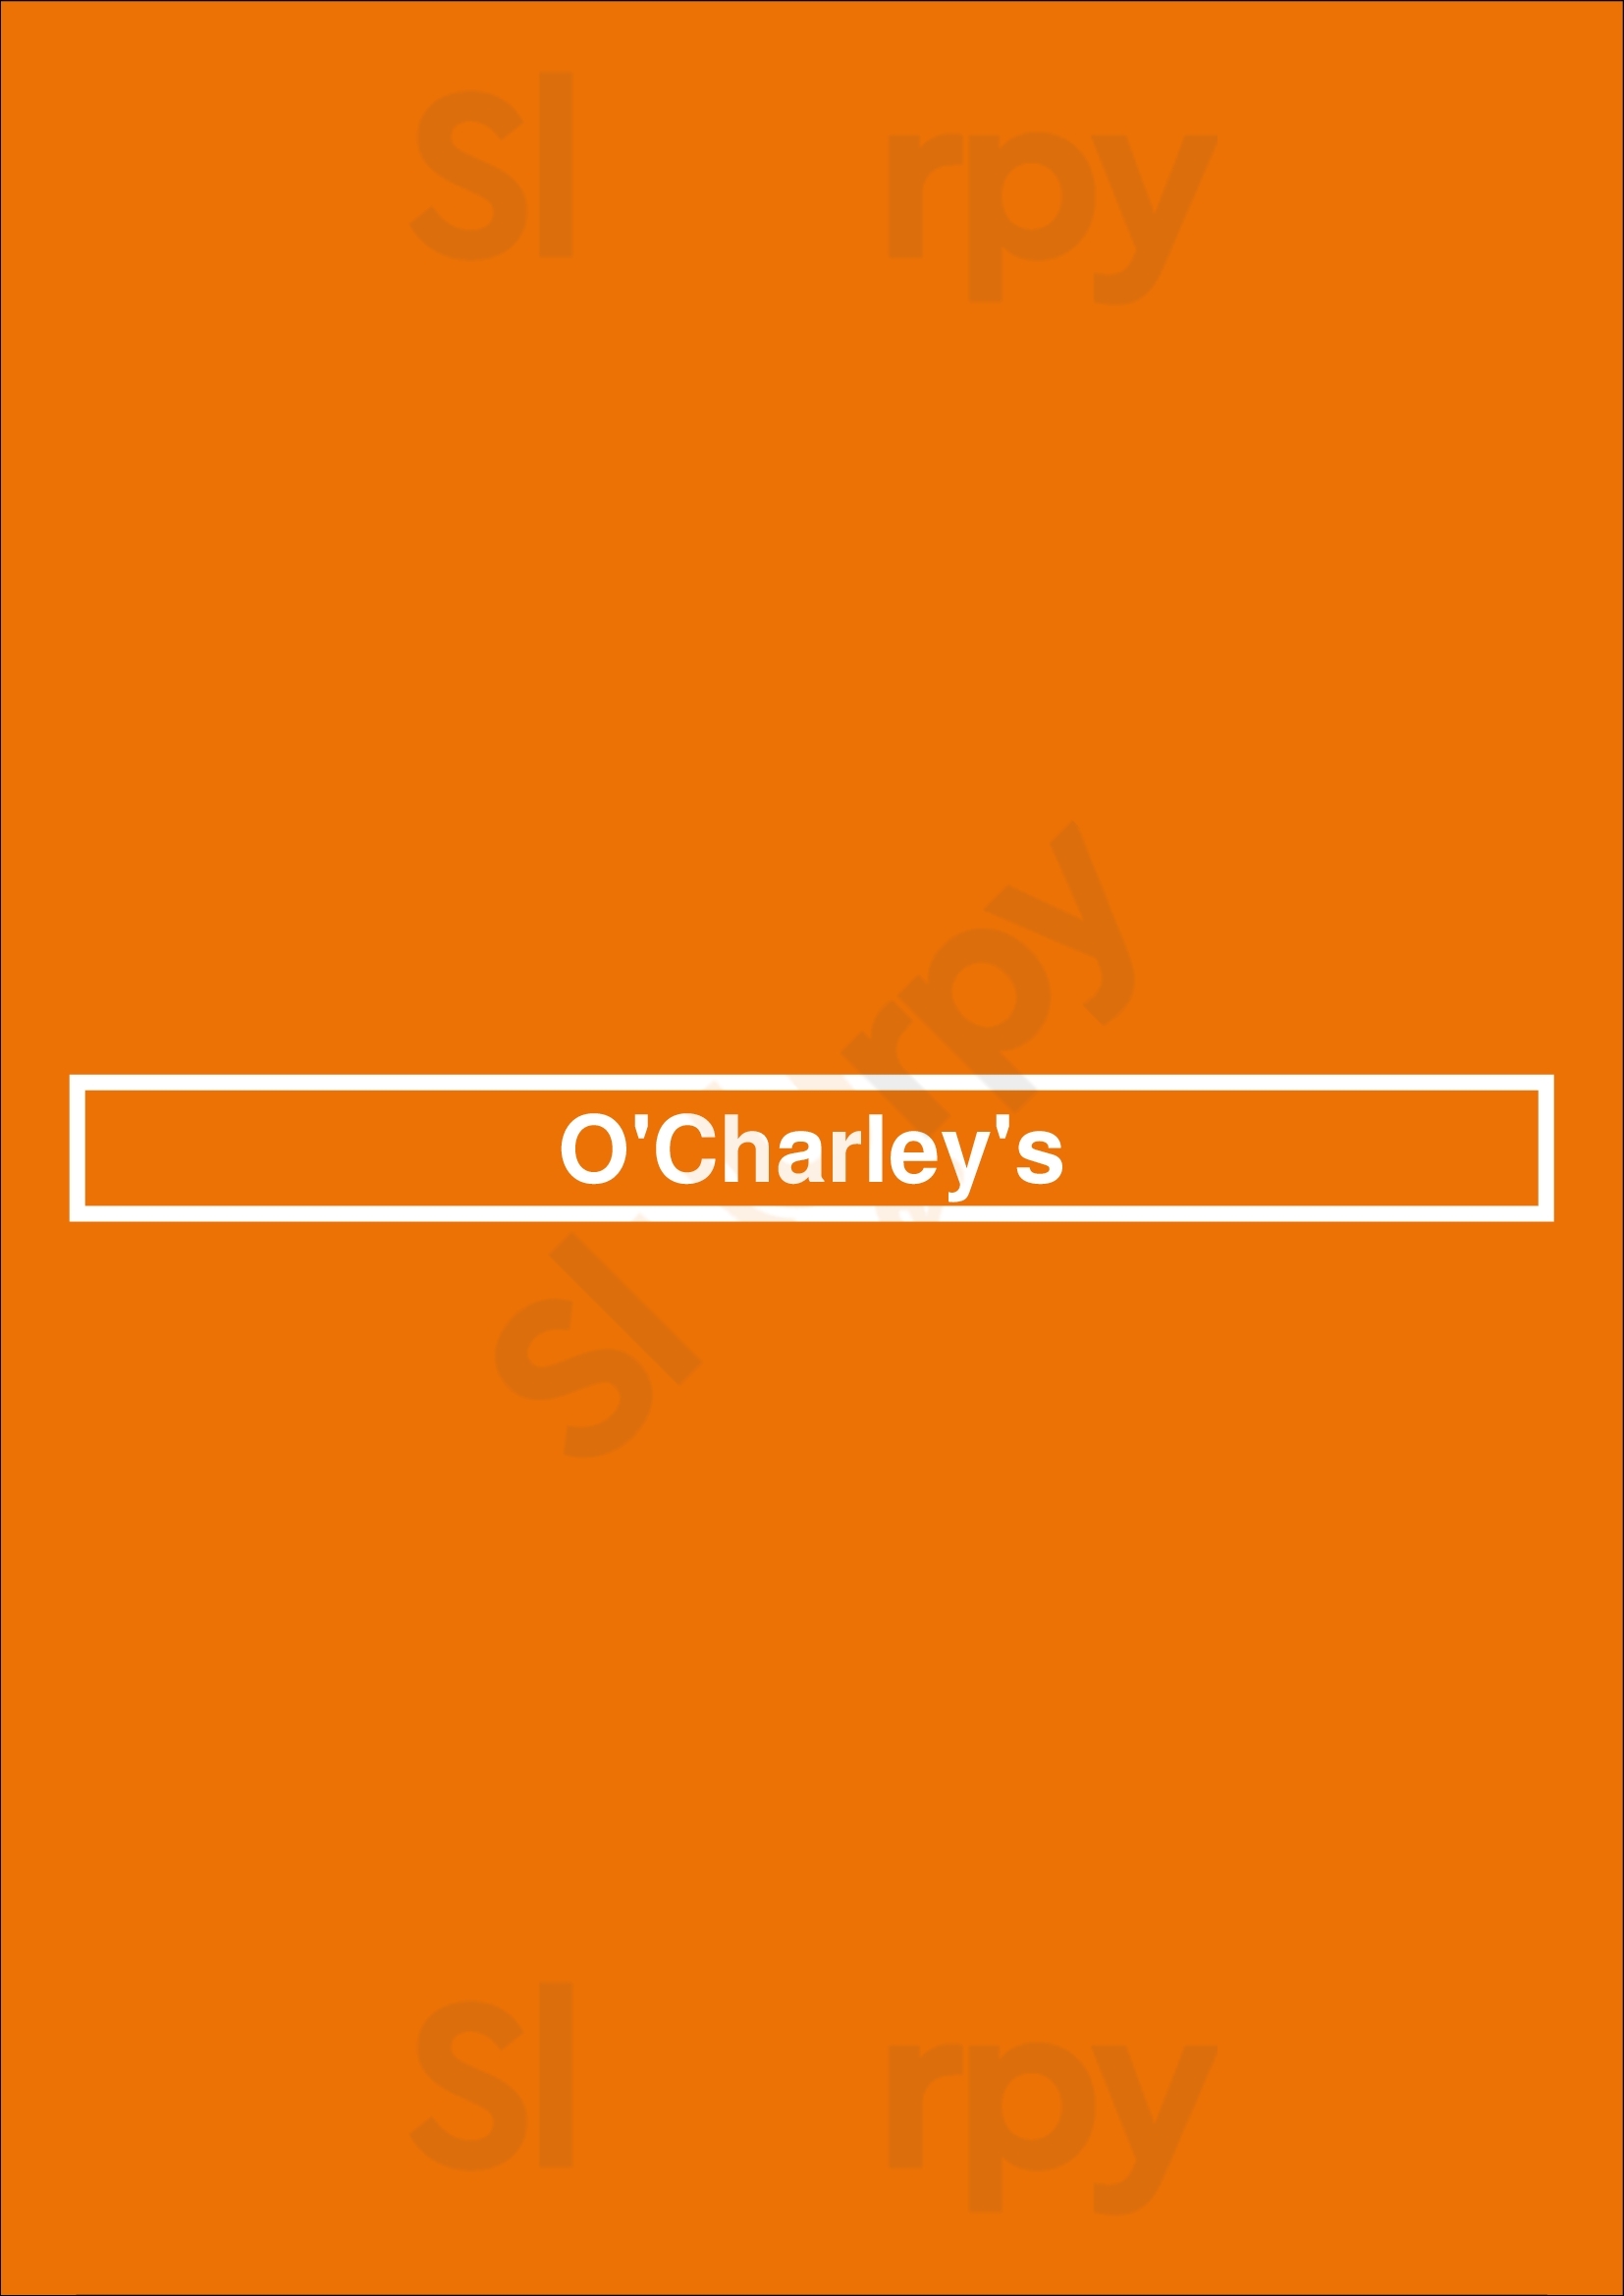 O'charley's Louisville Menu - 1